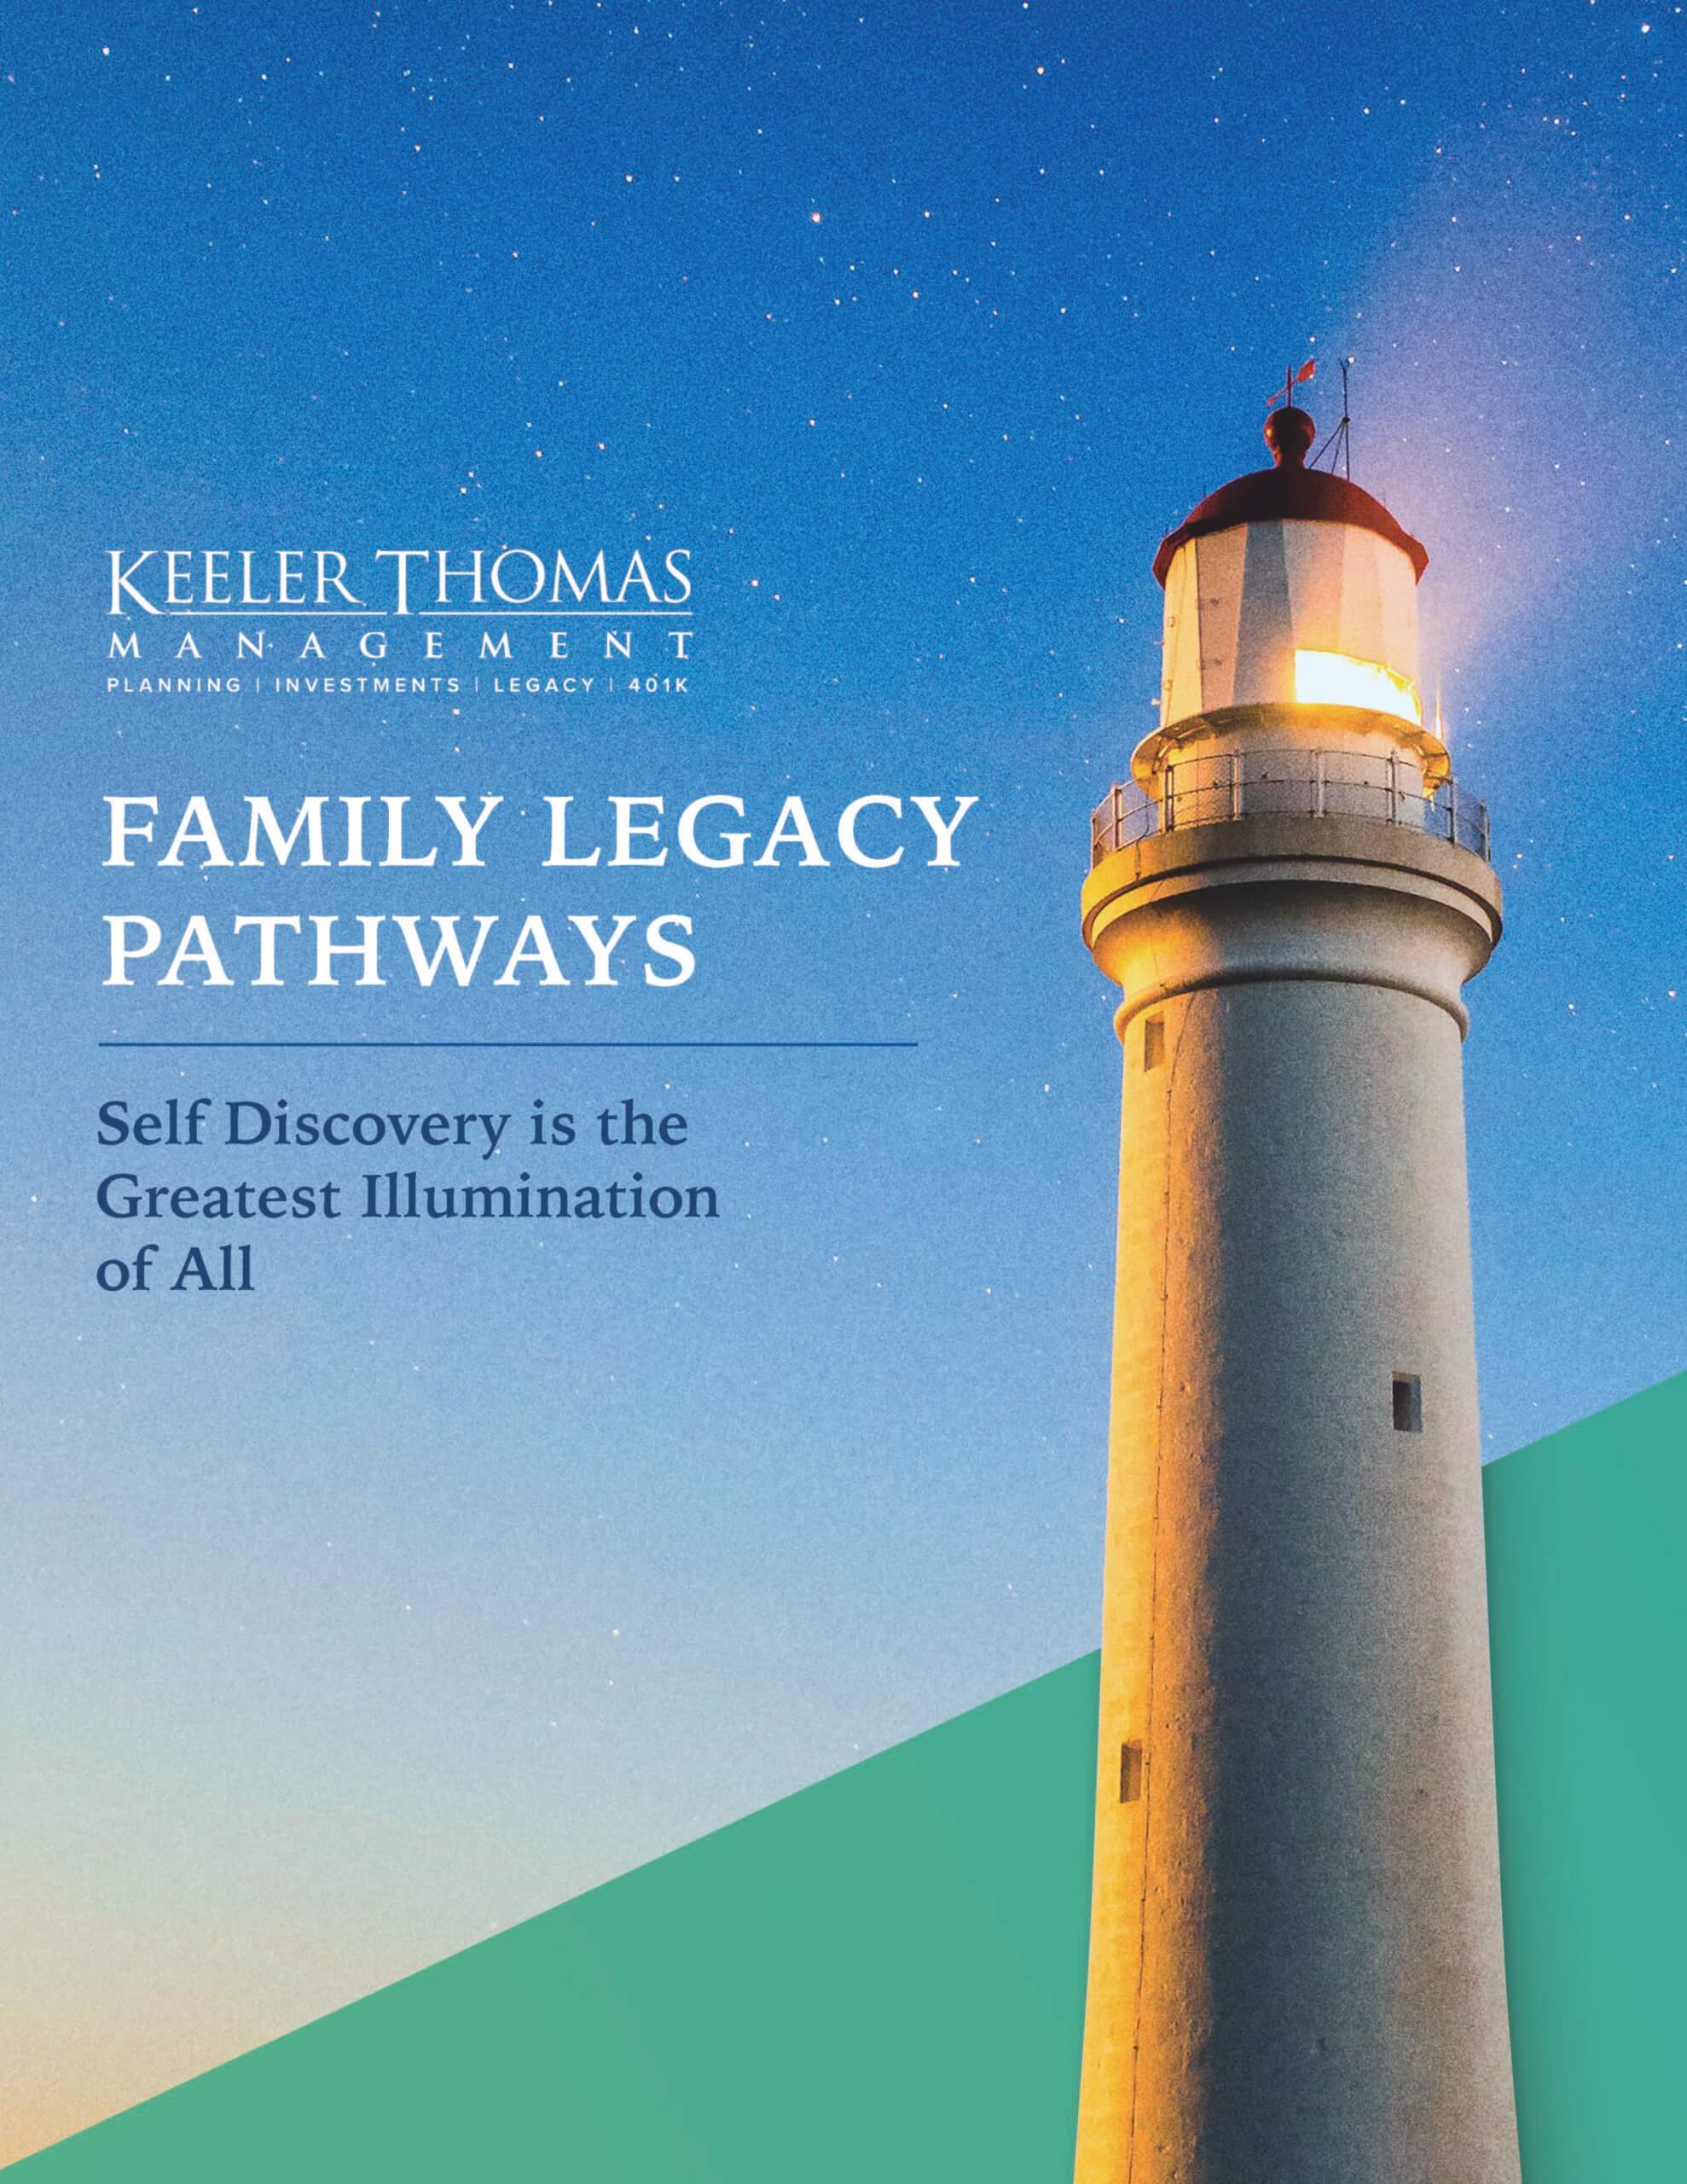 KTM Family Legacy Planning - Keeler Thomas Management